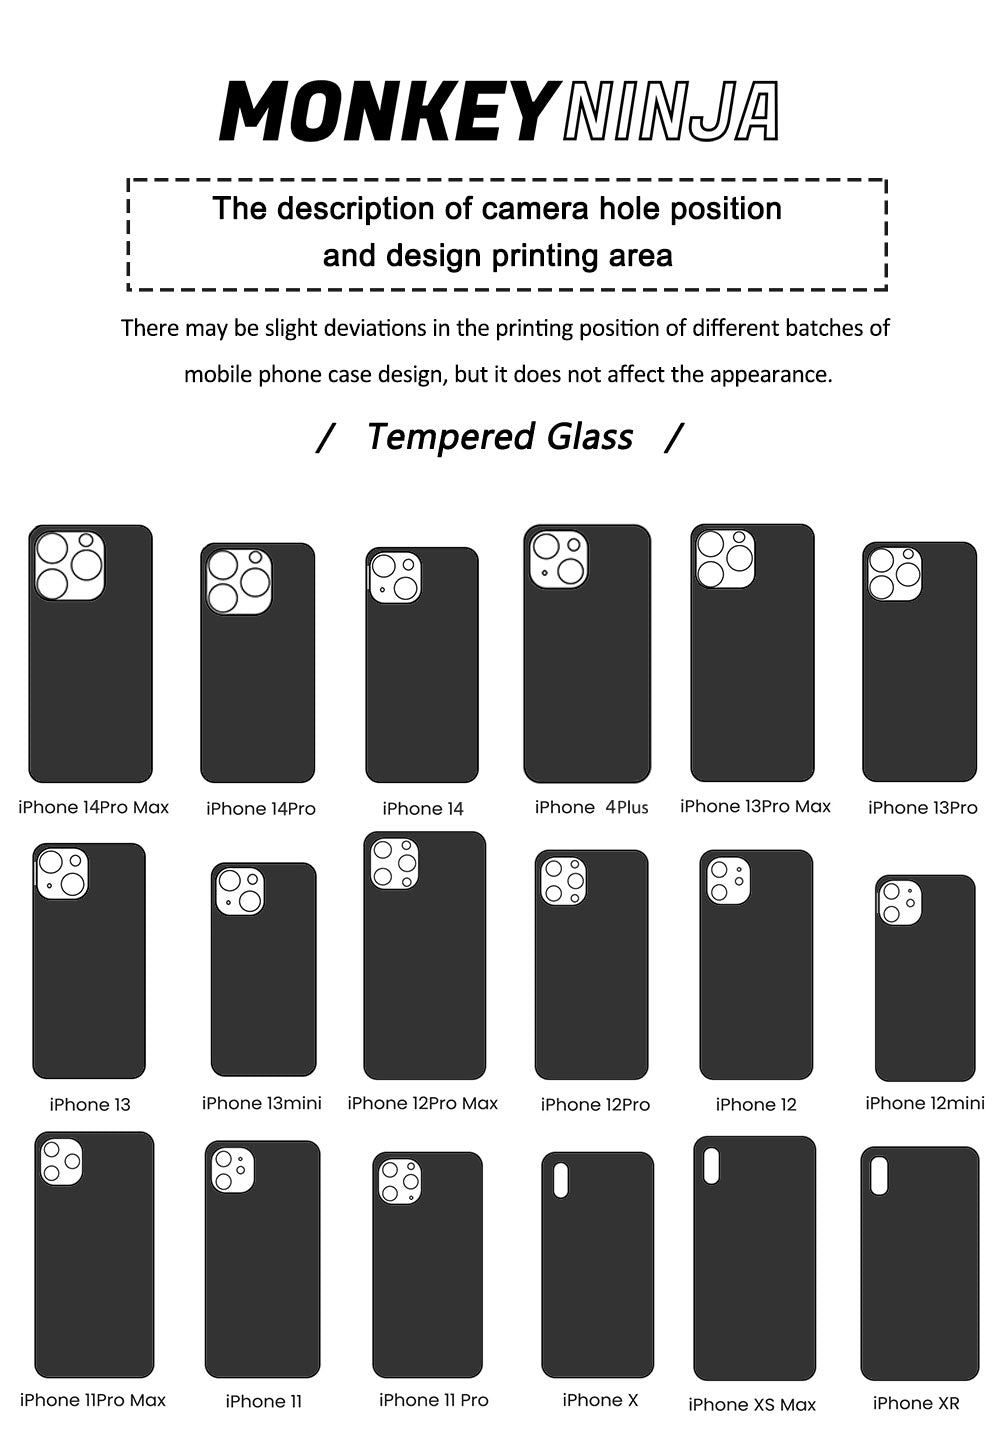 Illuminati Owl iPhone Tempered Glass Soft Silicone Phone Case